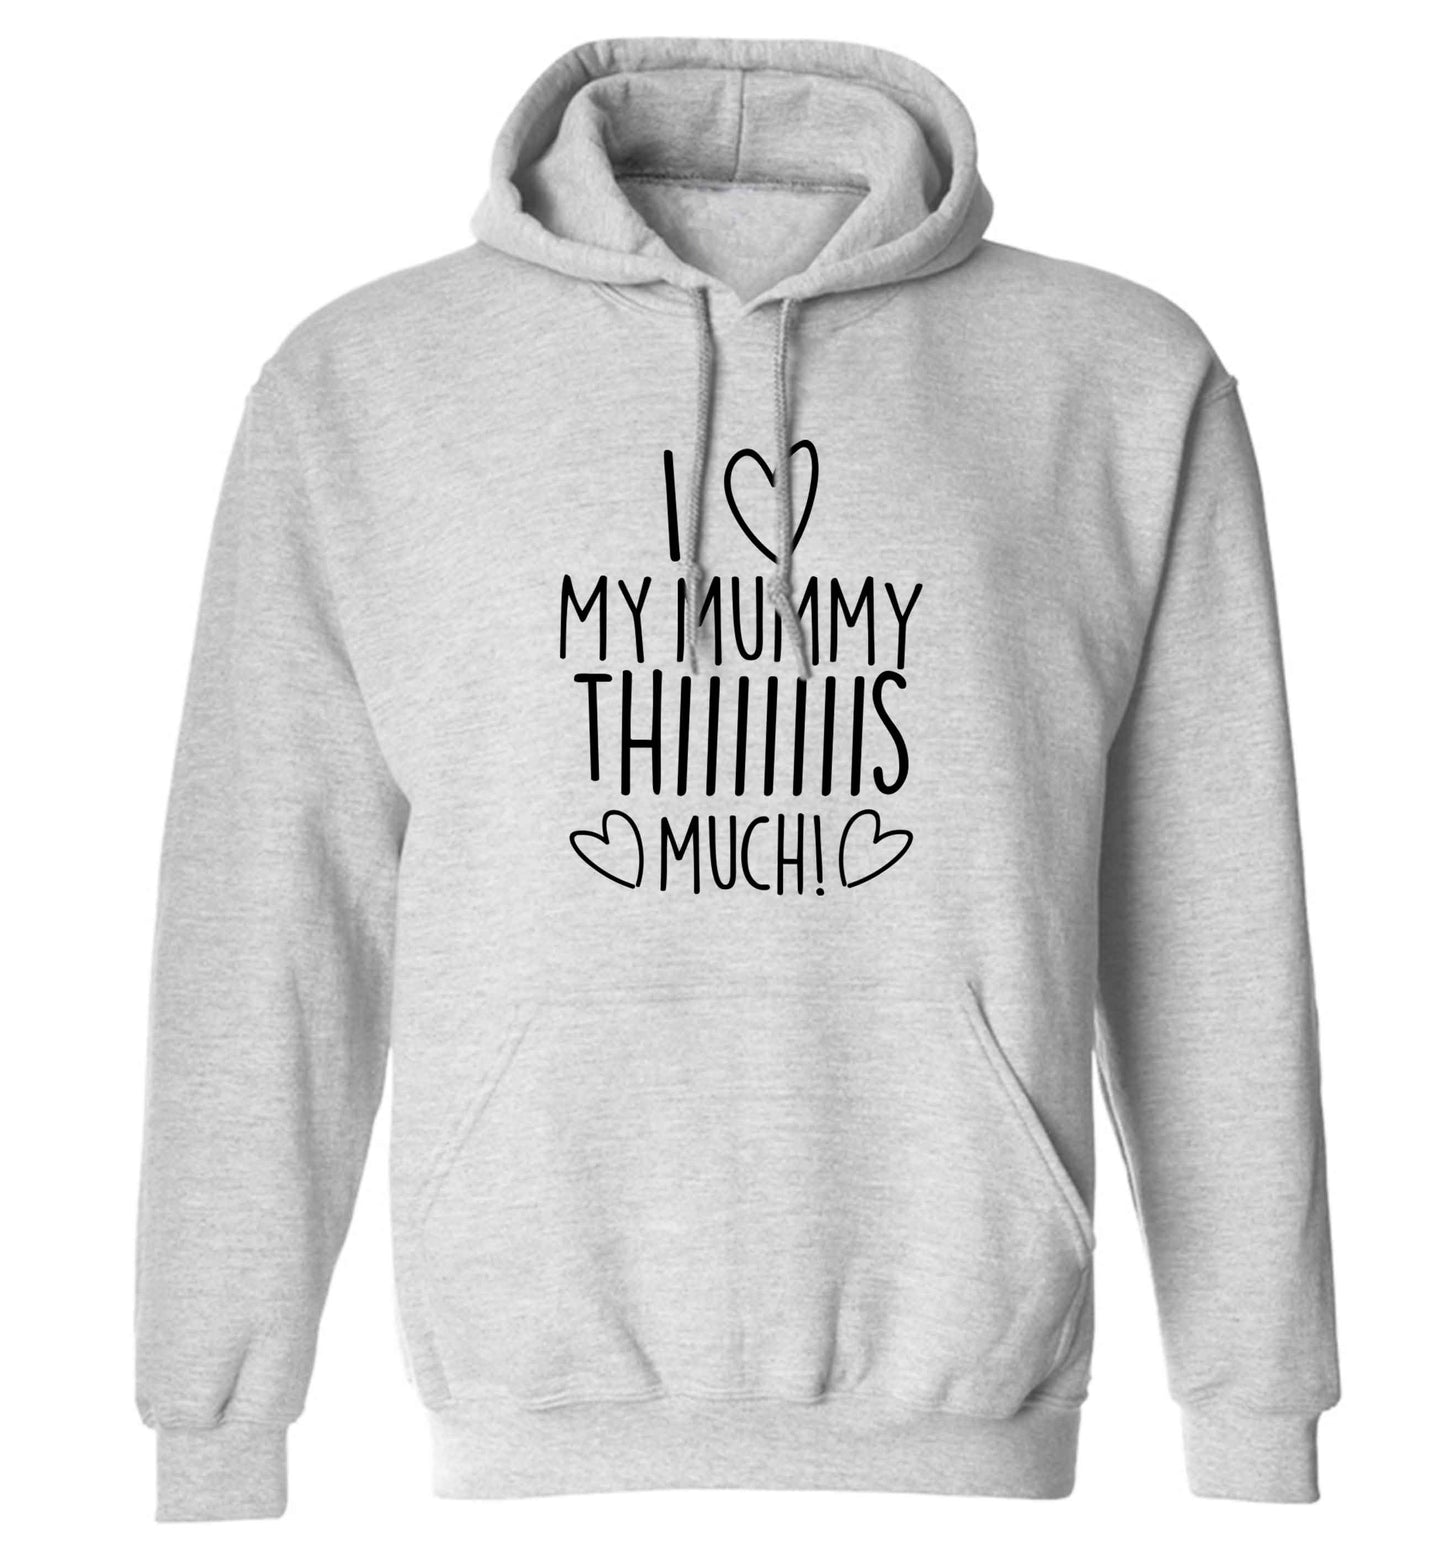 I love my mummy thiiiiis much! adults unisex grey hoodie 2XL